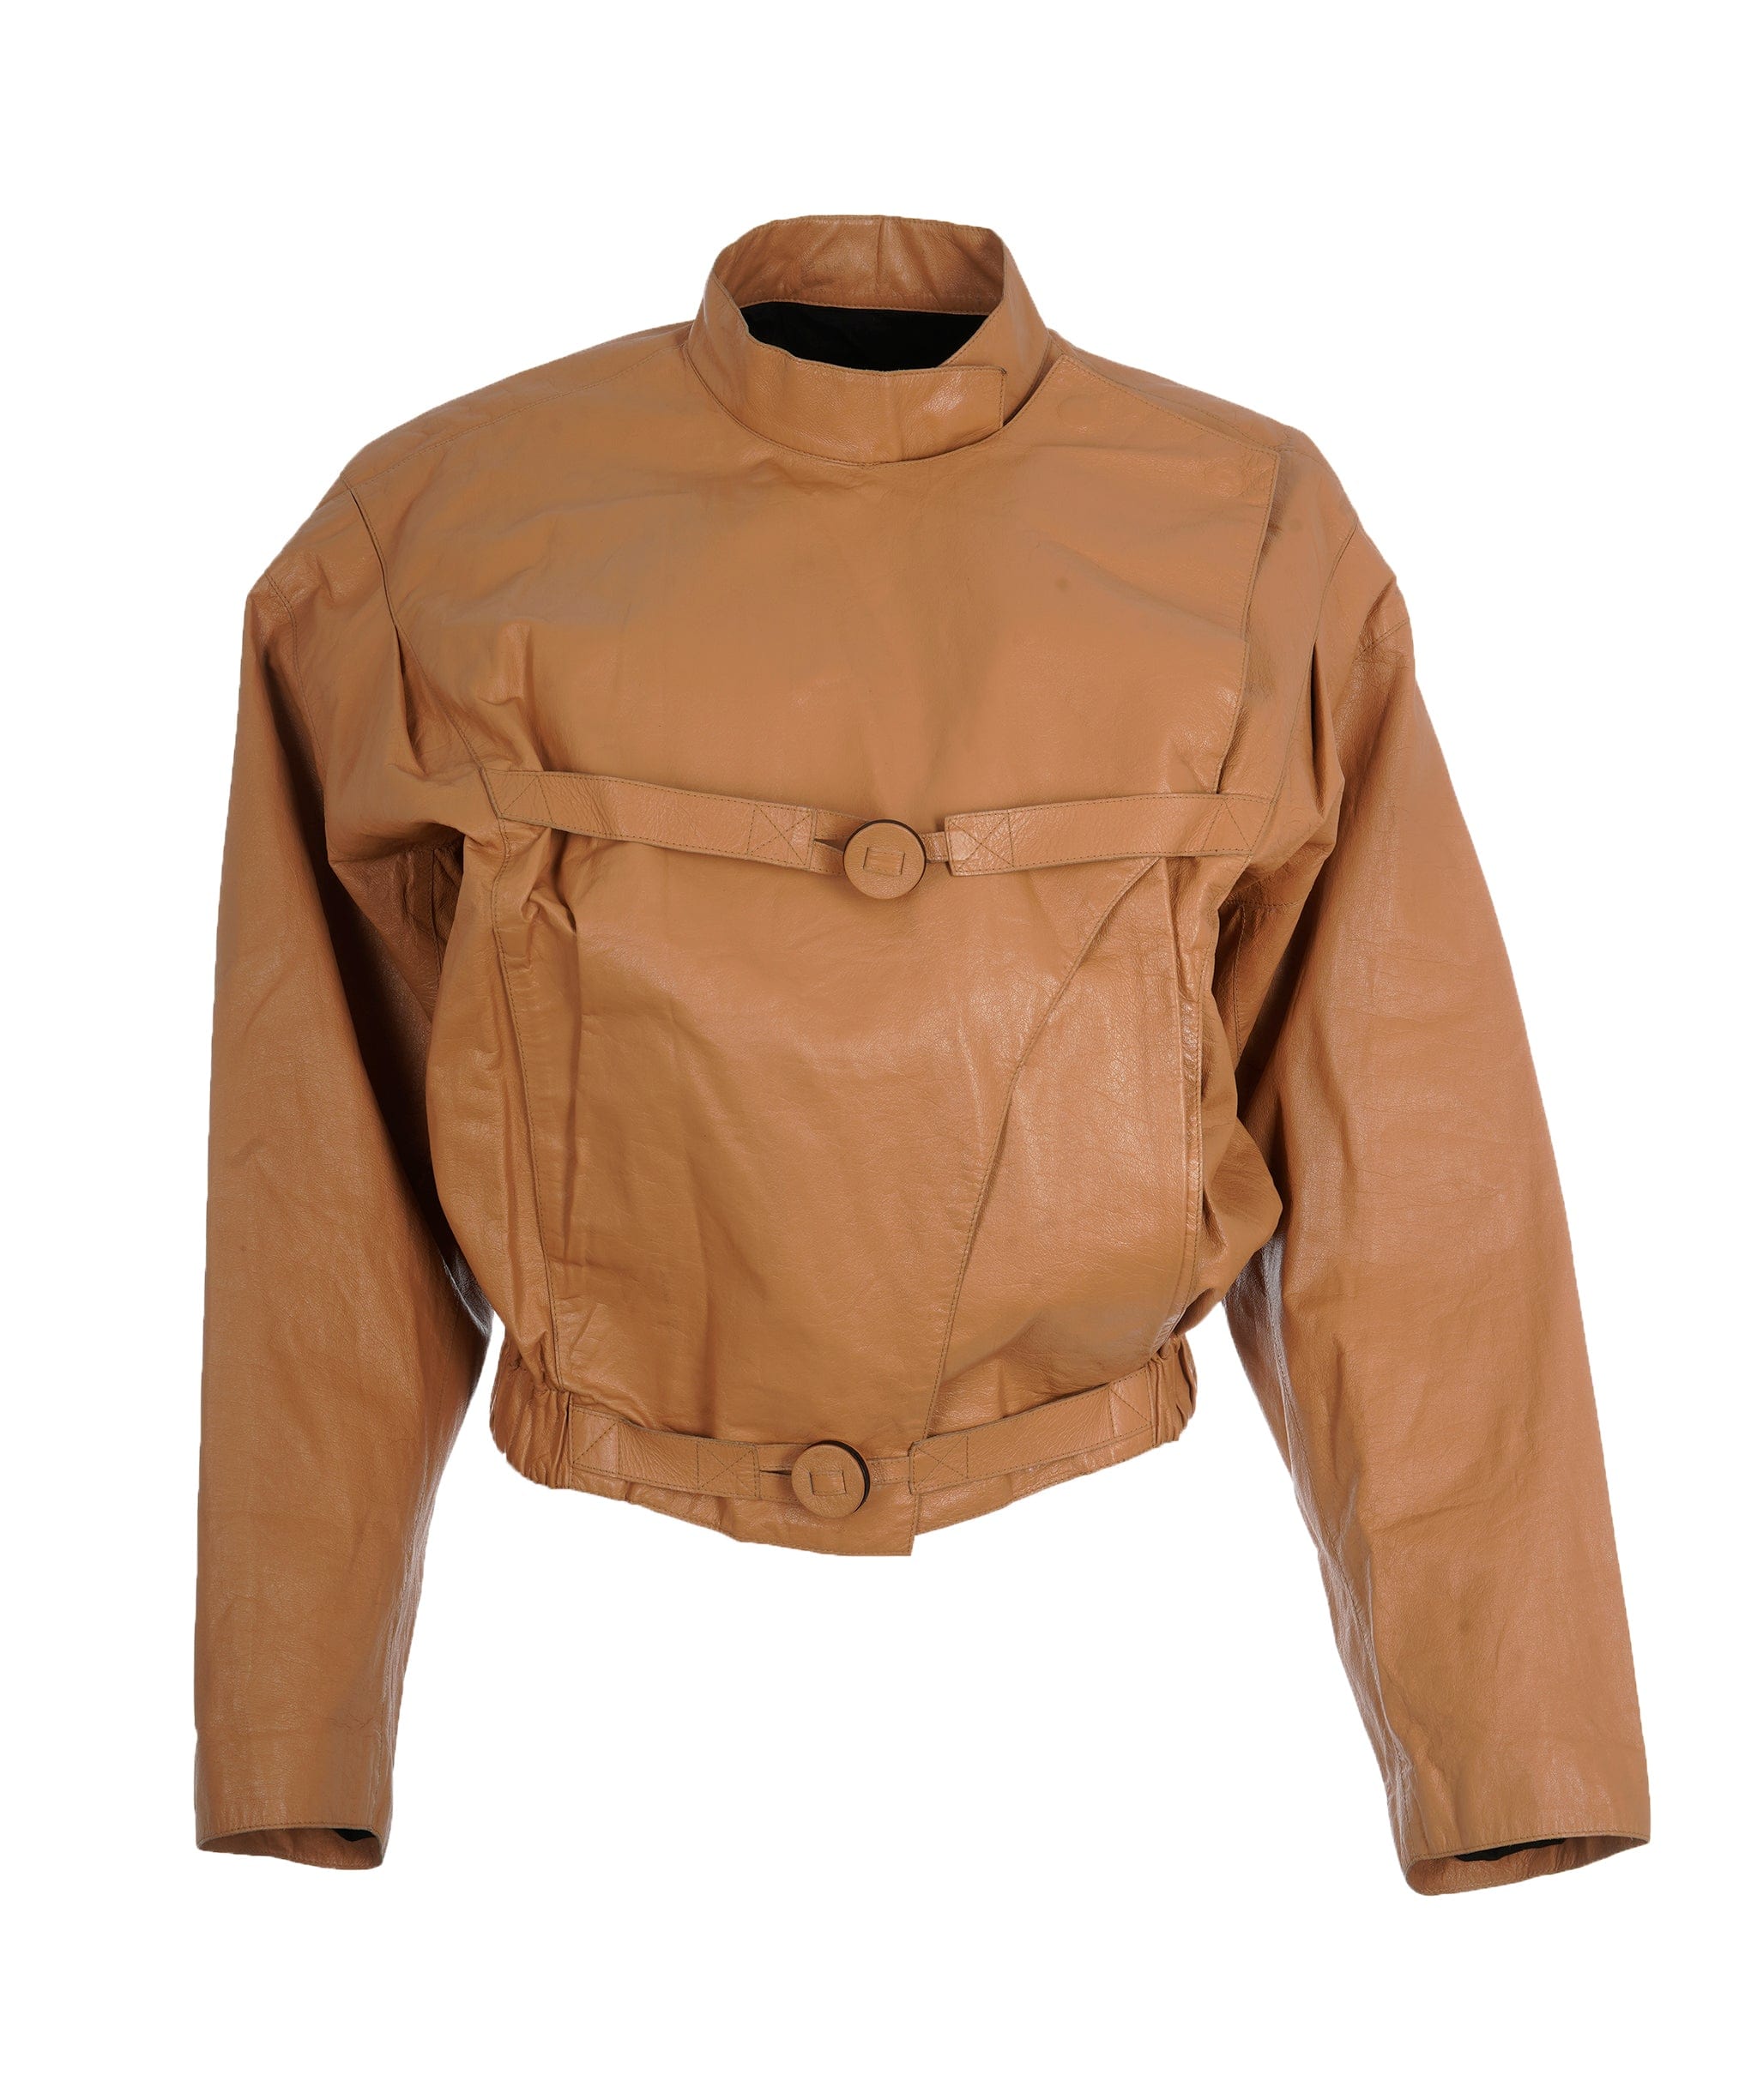 Loewe Loewe Tan Bomber Style Leather Jacket  ALL0576